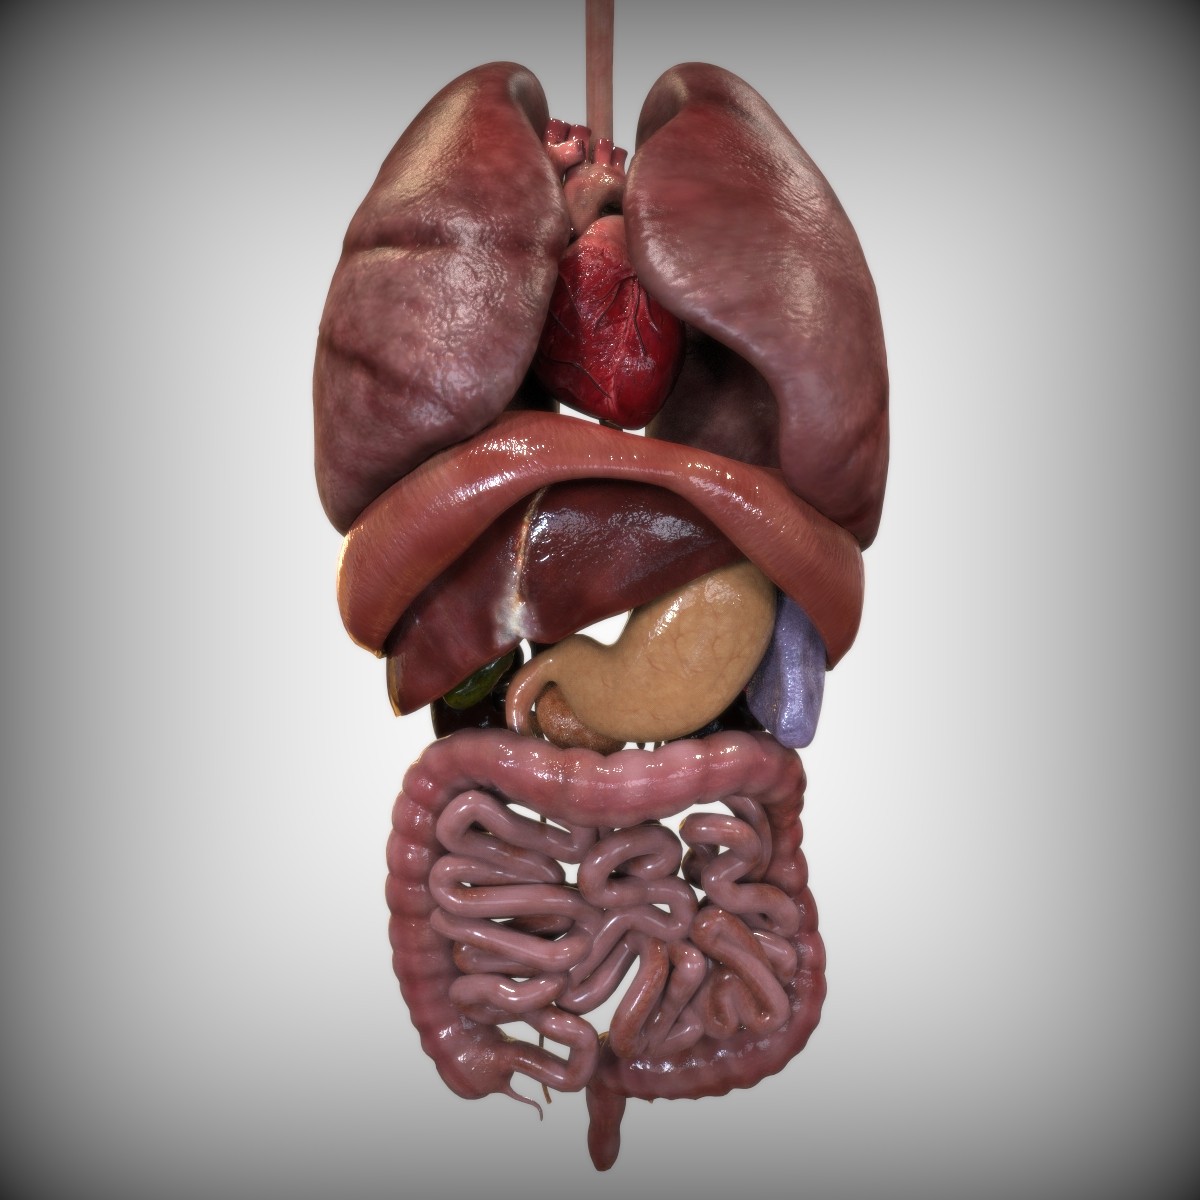 Male Human Anatomy Internal Organs : Human Body Internal Organs